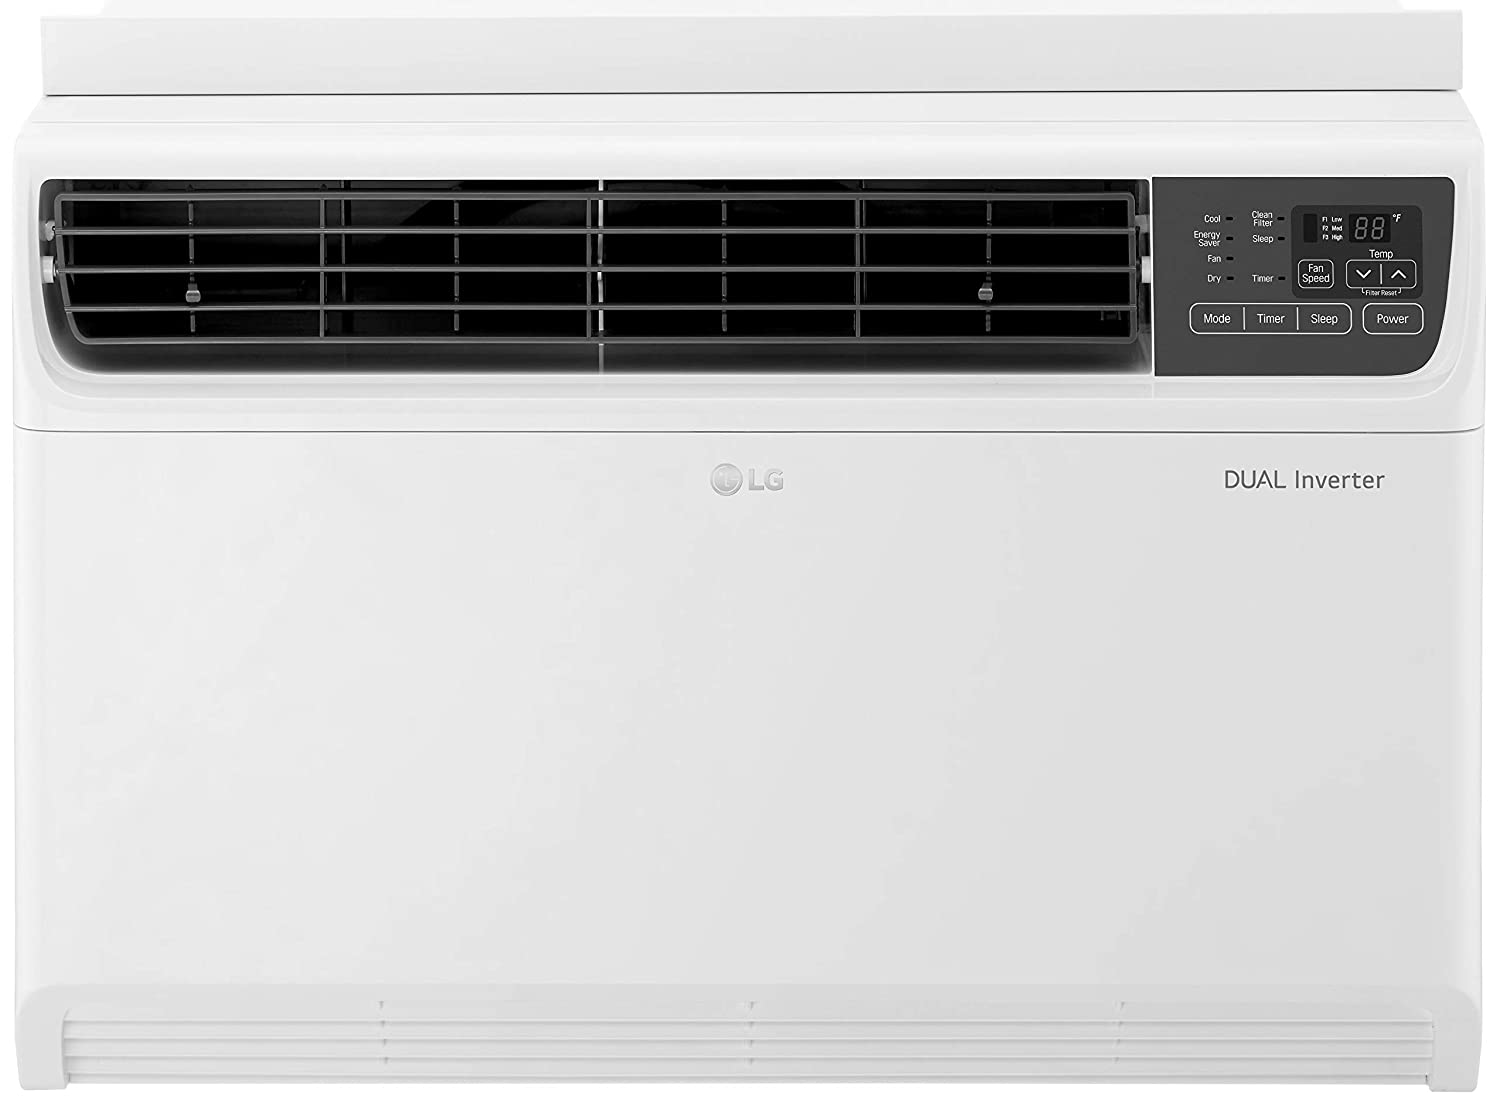 LG 1.5 Ton 3 Star Inverter Window AC (Copper, 2020 Model, JW-Q18WUXA1, White)